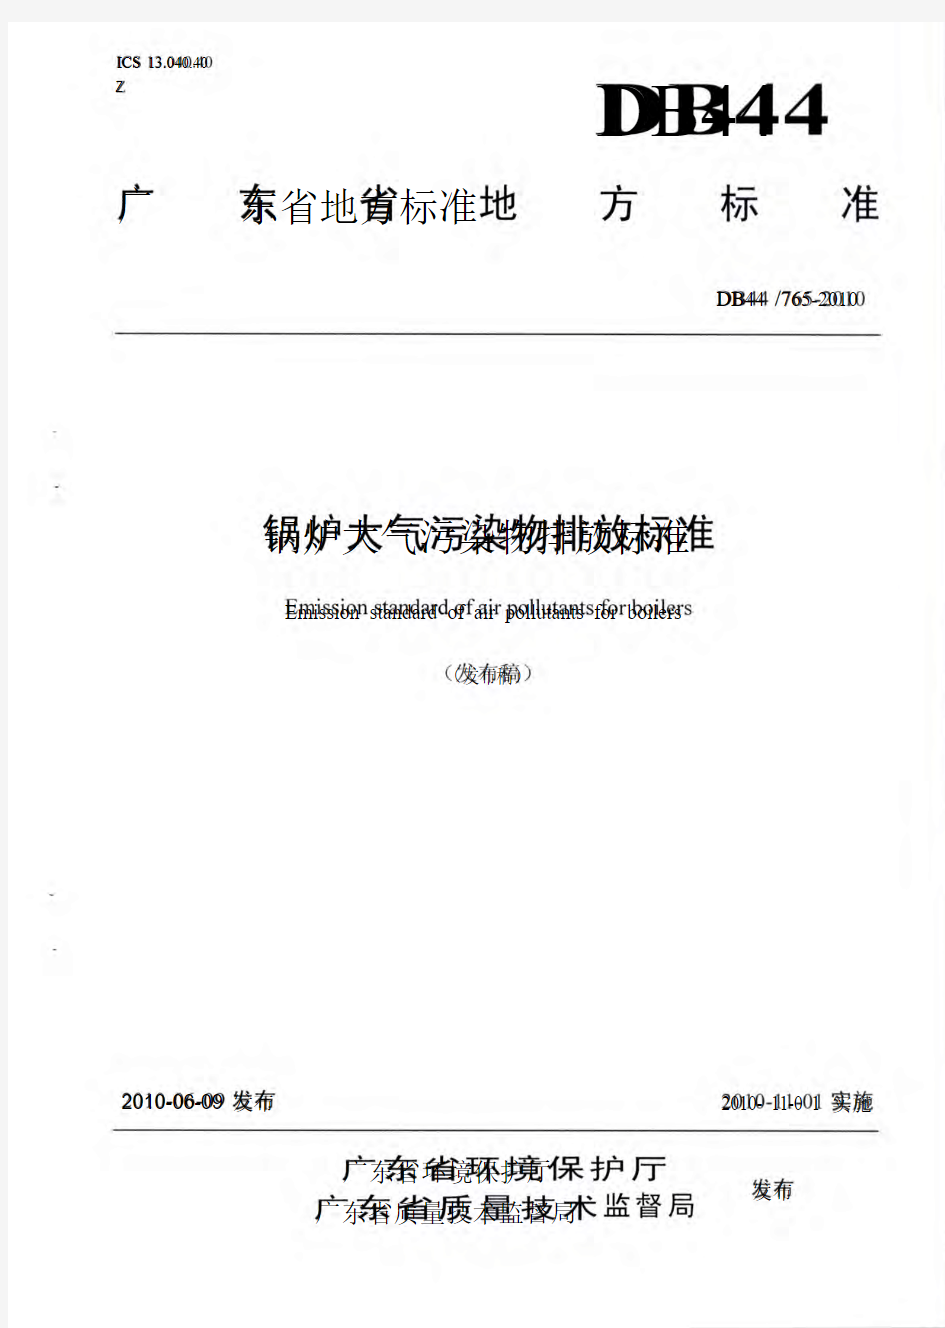 the 关于转发广东省锅炉大气污染物排放标准的通知》佛环函2010422